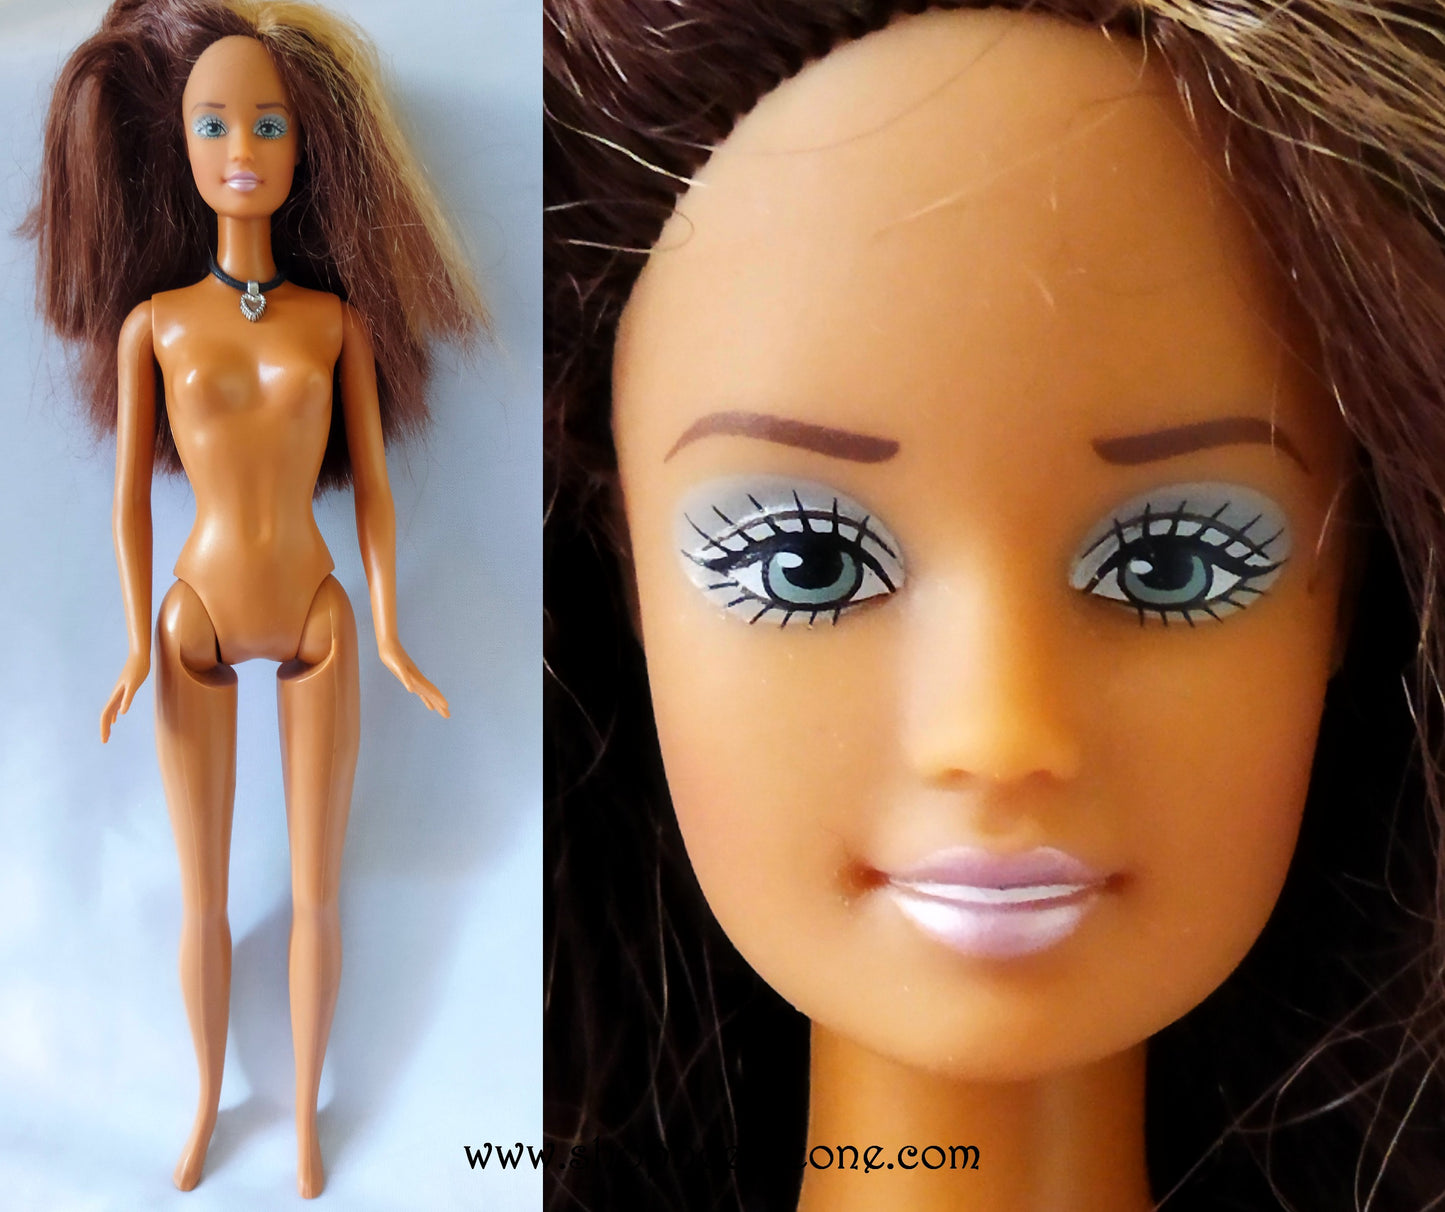 Teresa Cali / California Girls - Mattel 2004 - Poupée nue